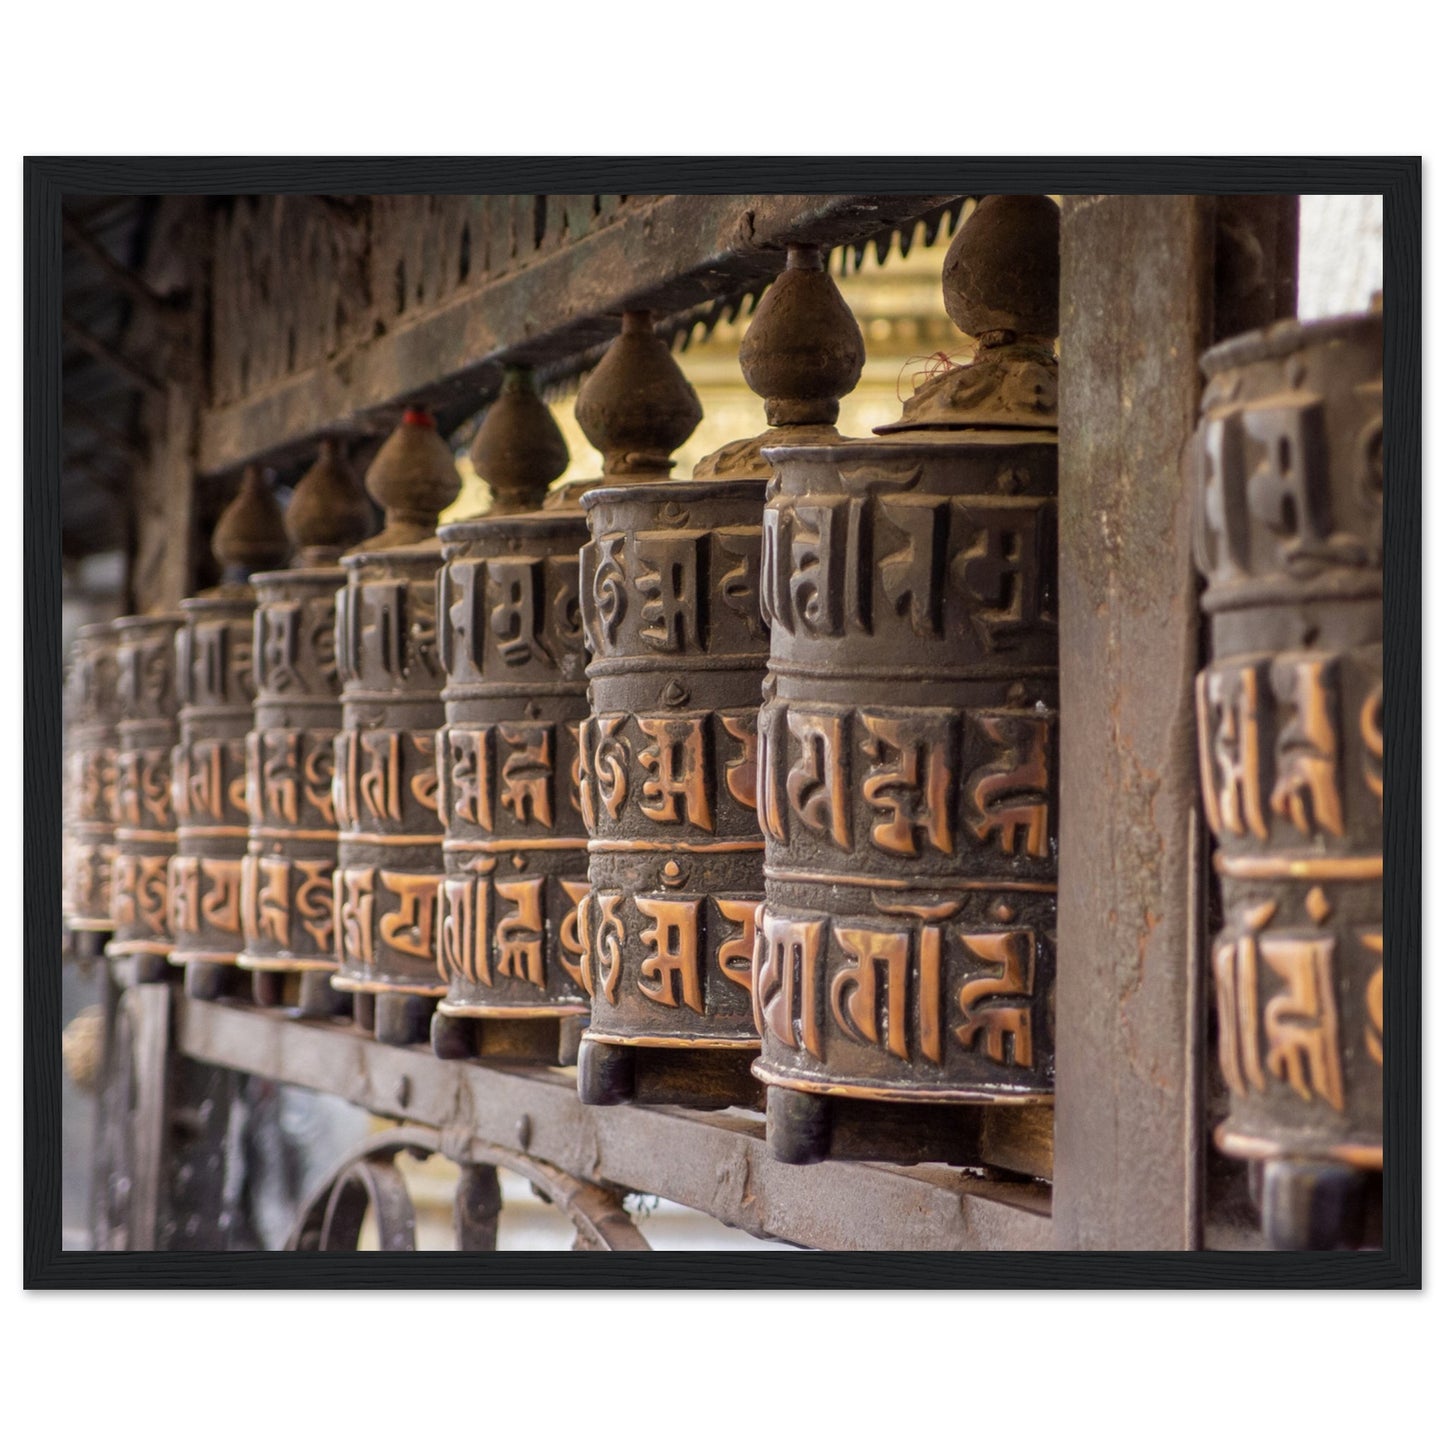 Nepalese prayer wheels